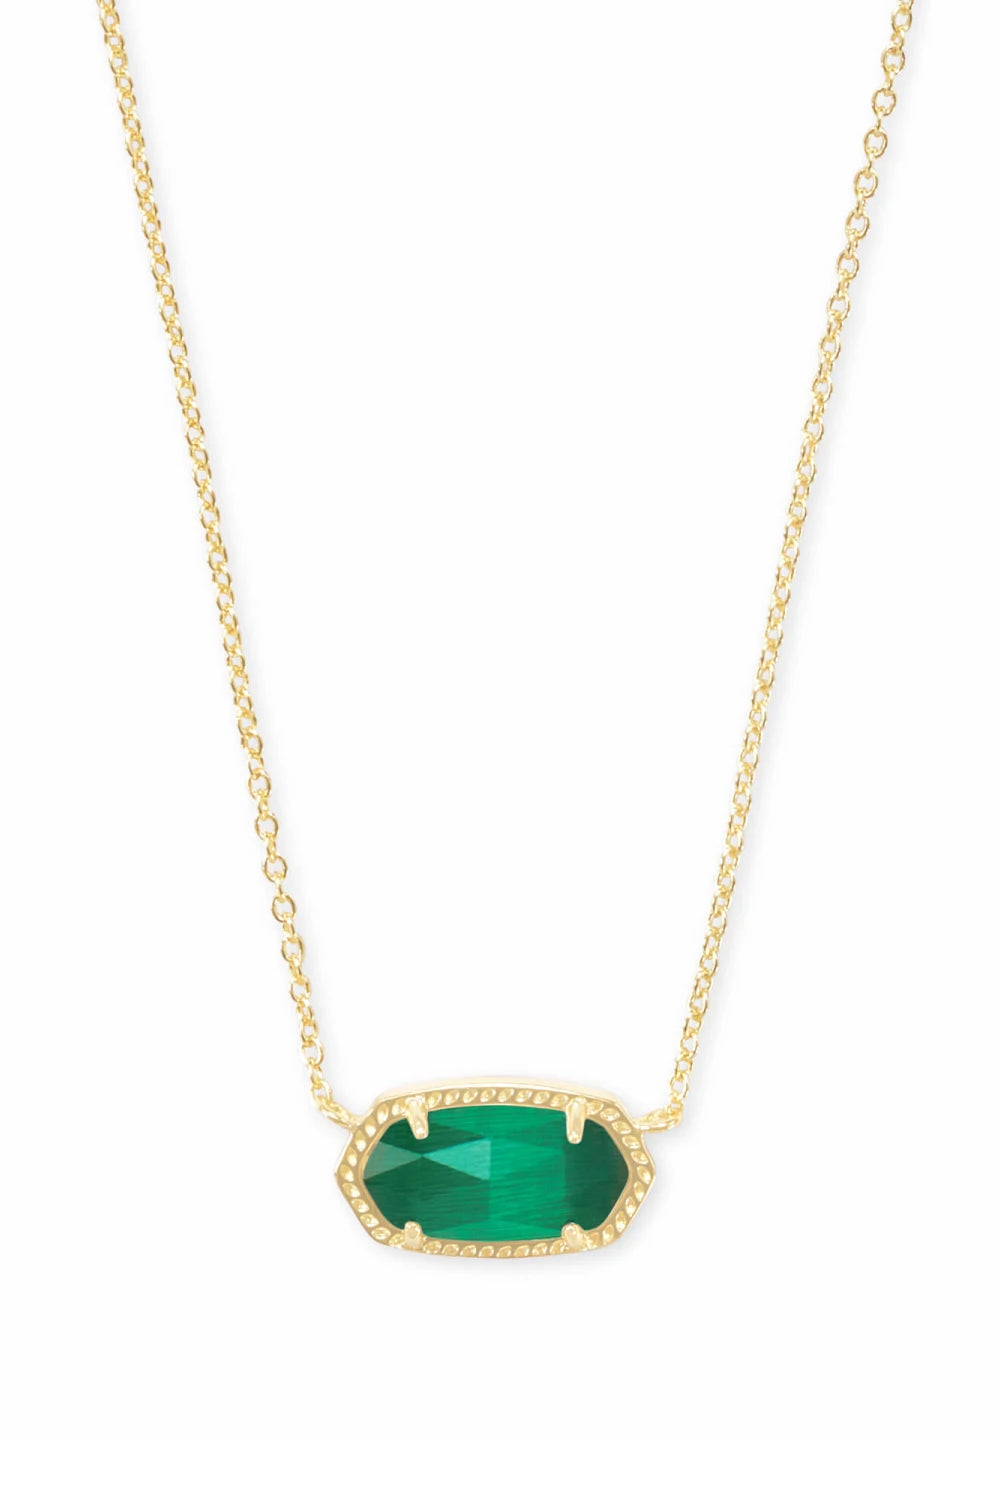 Kendra Scott: Elisa Gold Short Pendant Necklace - Emerald Cats Eye | Makk Fashions